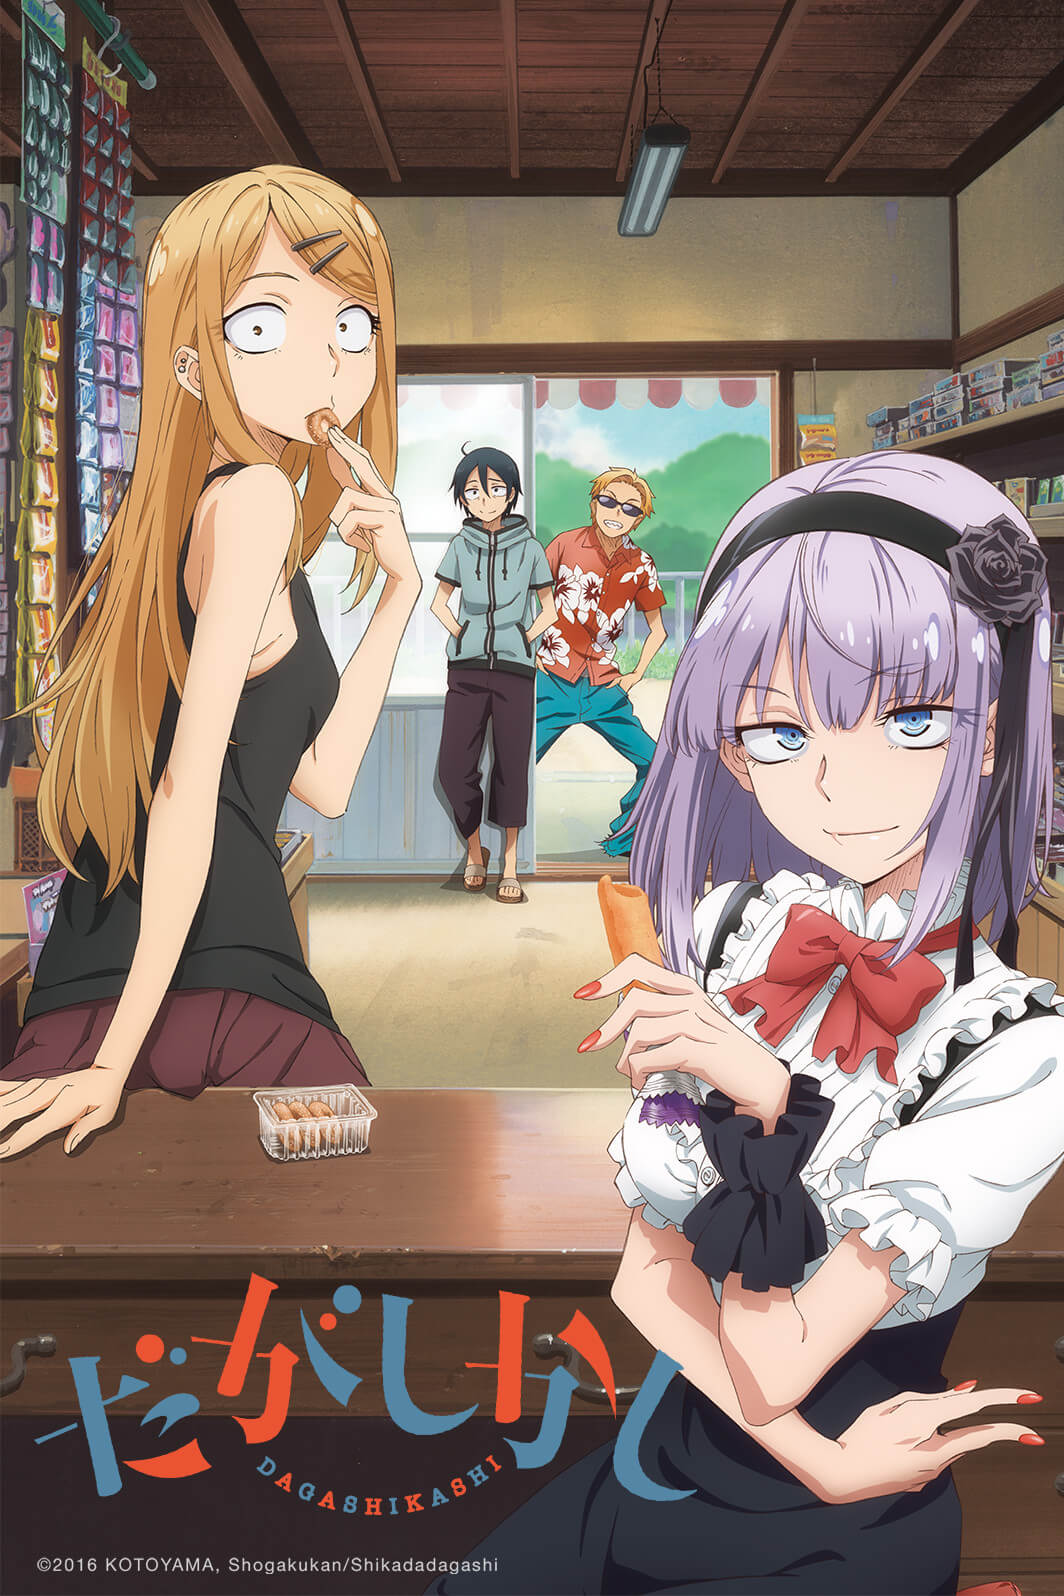 Manga/anime/lightnovelvn - Maou-sama, Retry! Vol.5 – 28/02